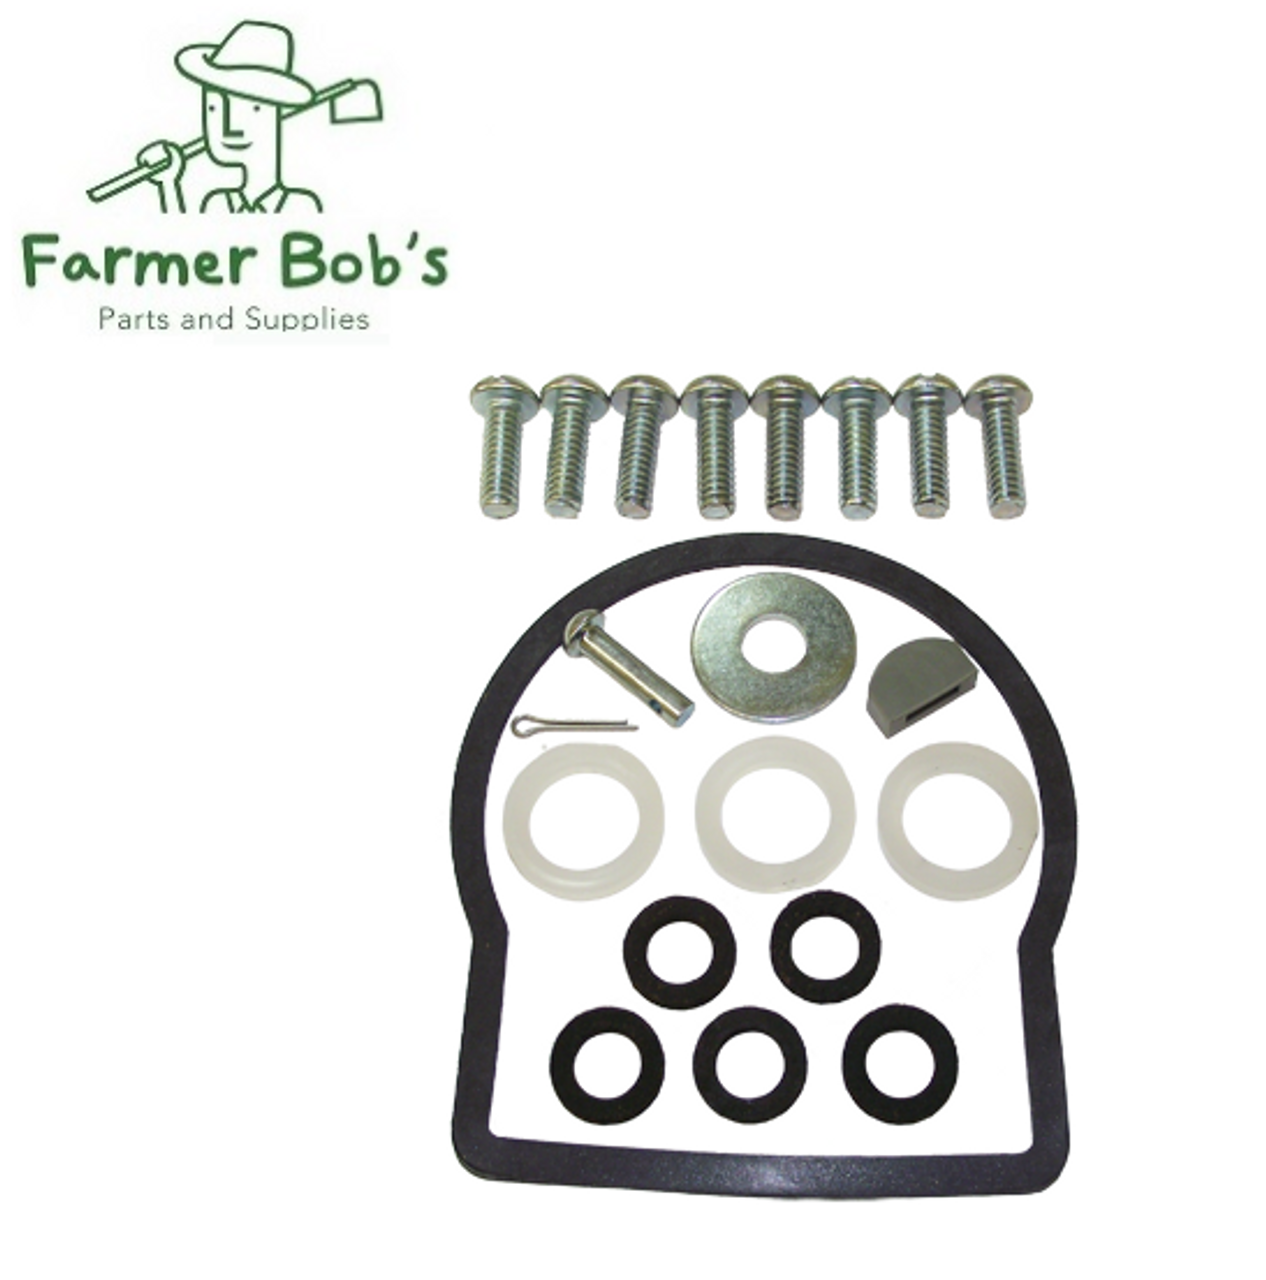 PK-AB17-KIT Farmer Bob's Parts and Supplies